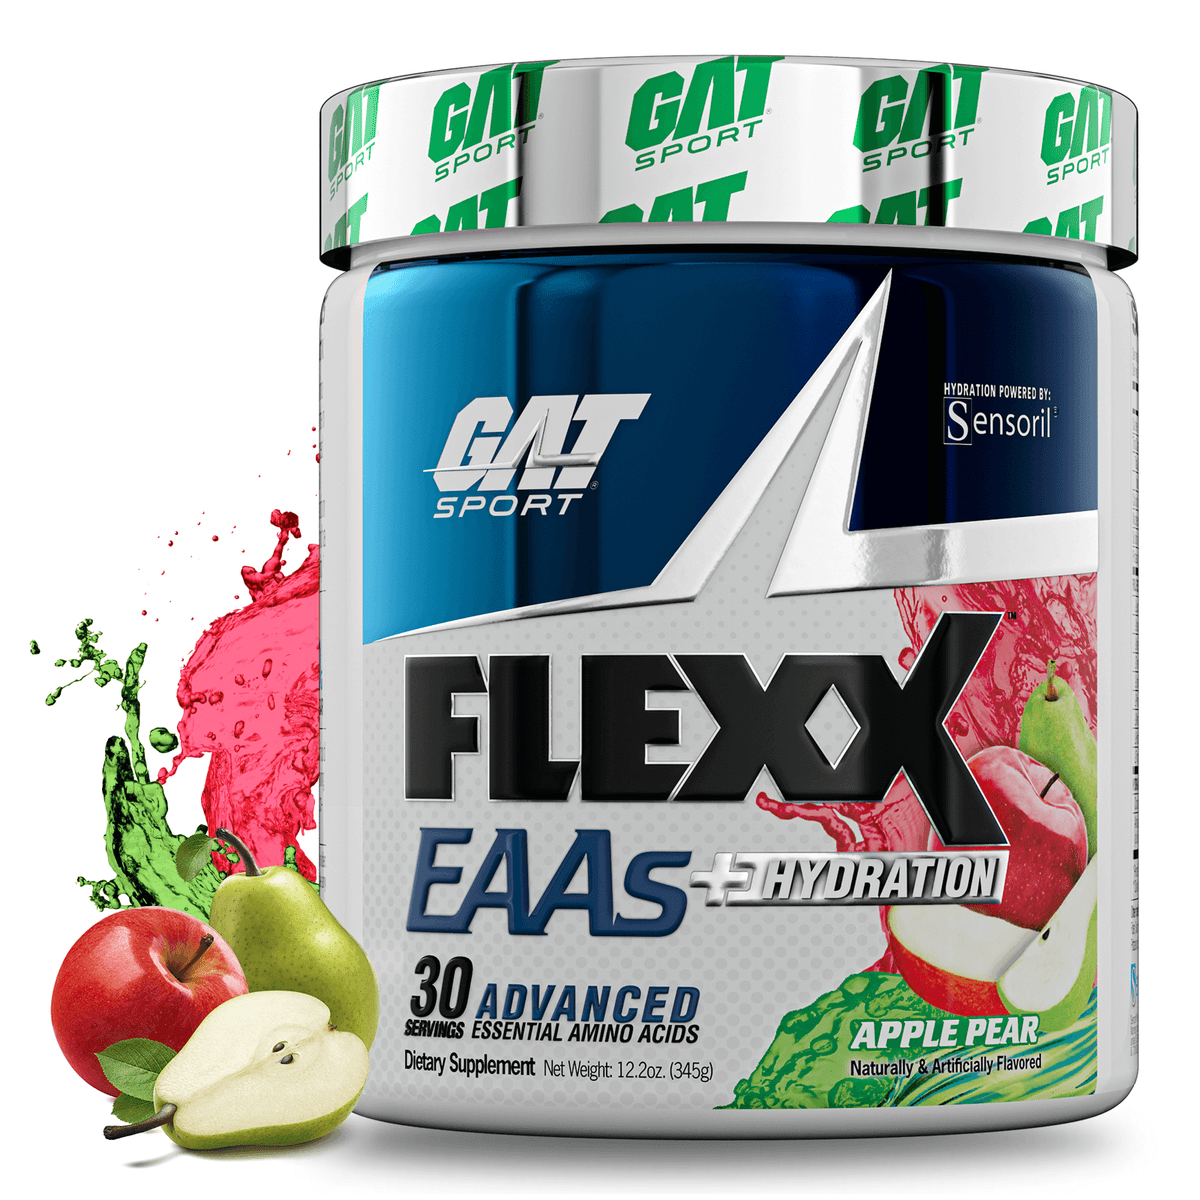 Bote de producto Flexx EAAs +Hydration de Gat Sport